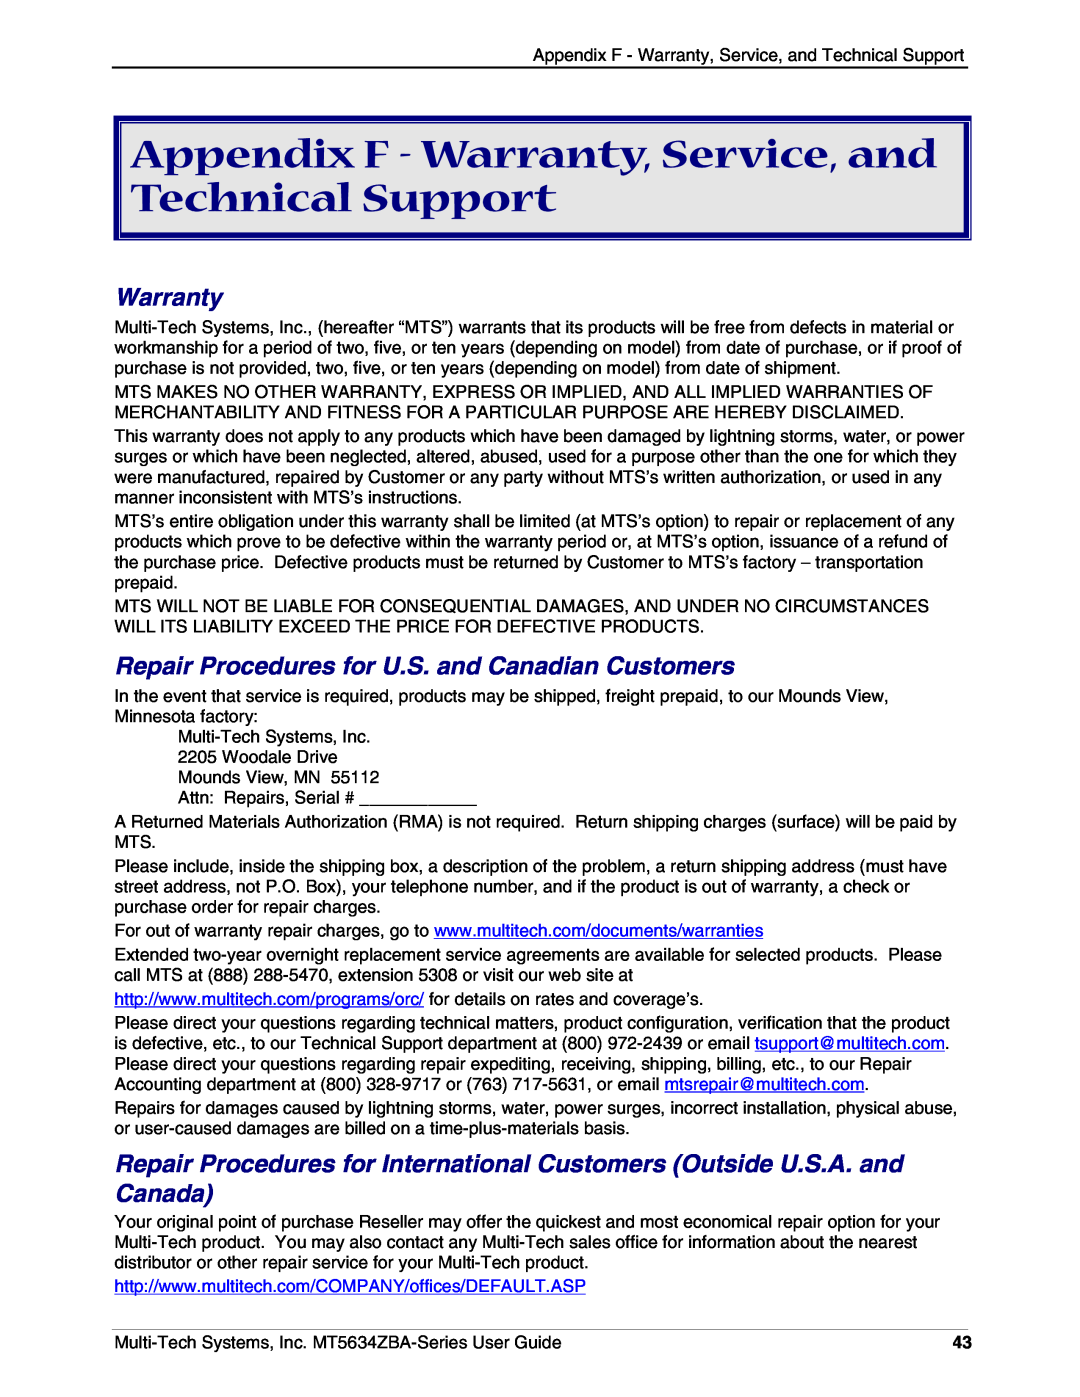 Multi-Tech Systems MT5634ZBAV.90, MT5634ZBA-VV.90, MT5634ZBAV.92 manual Appendix F - Warranty, Service, and Technical Support 